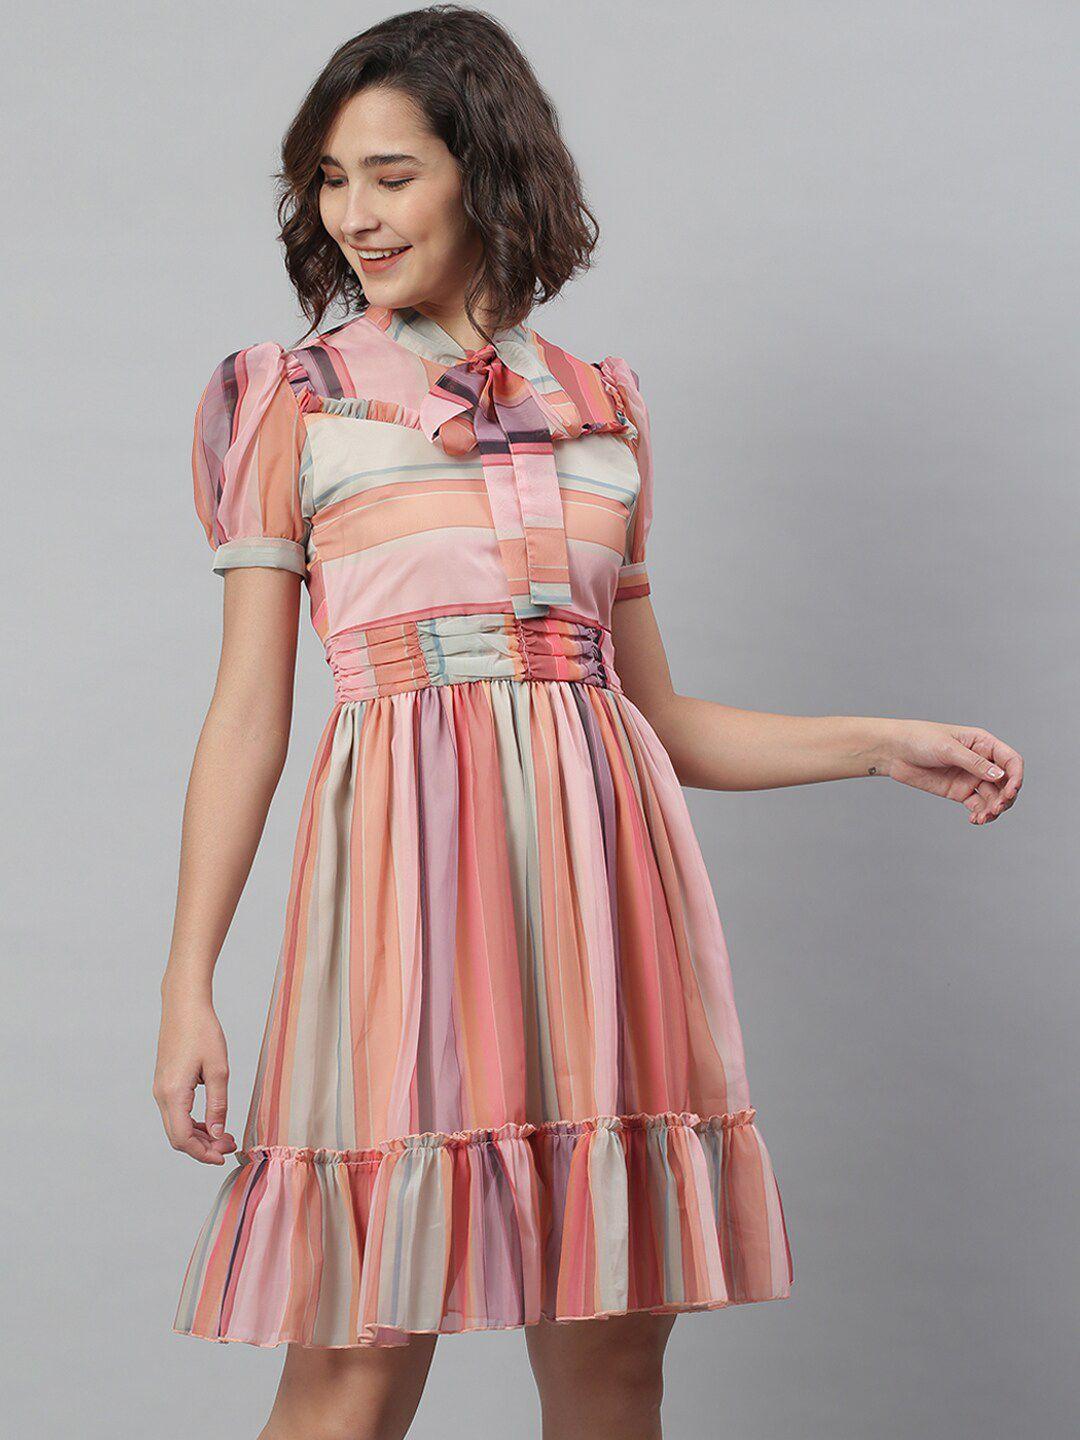 kassually multicoloured striped a-line dress